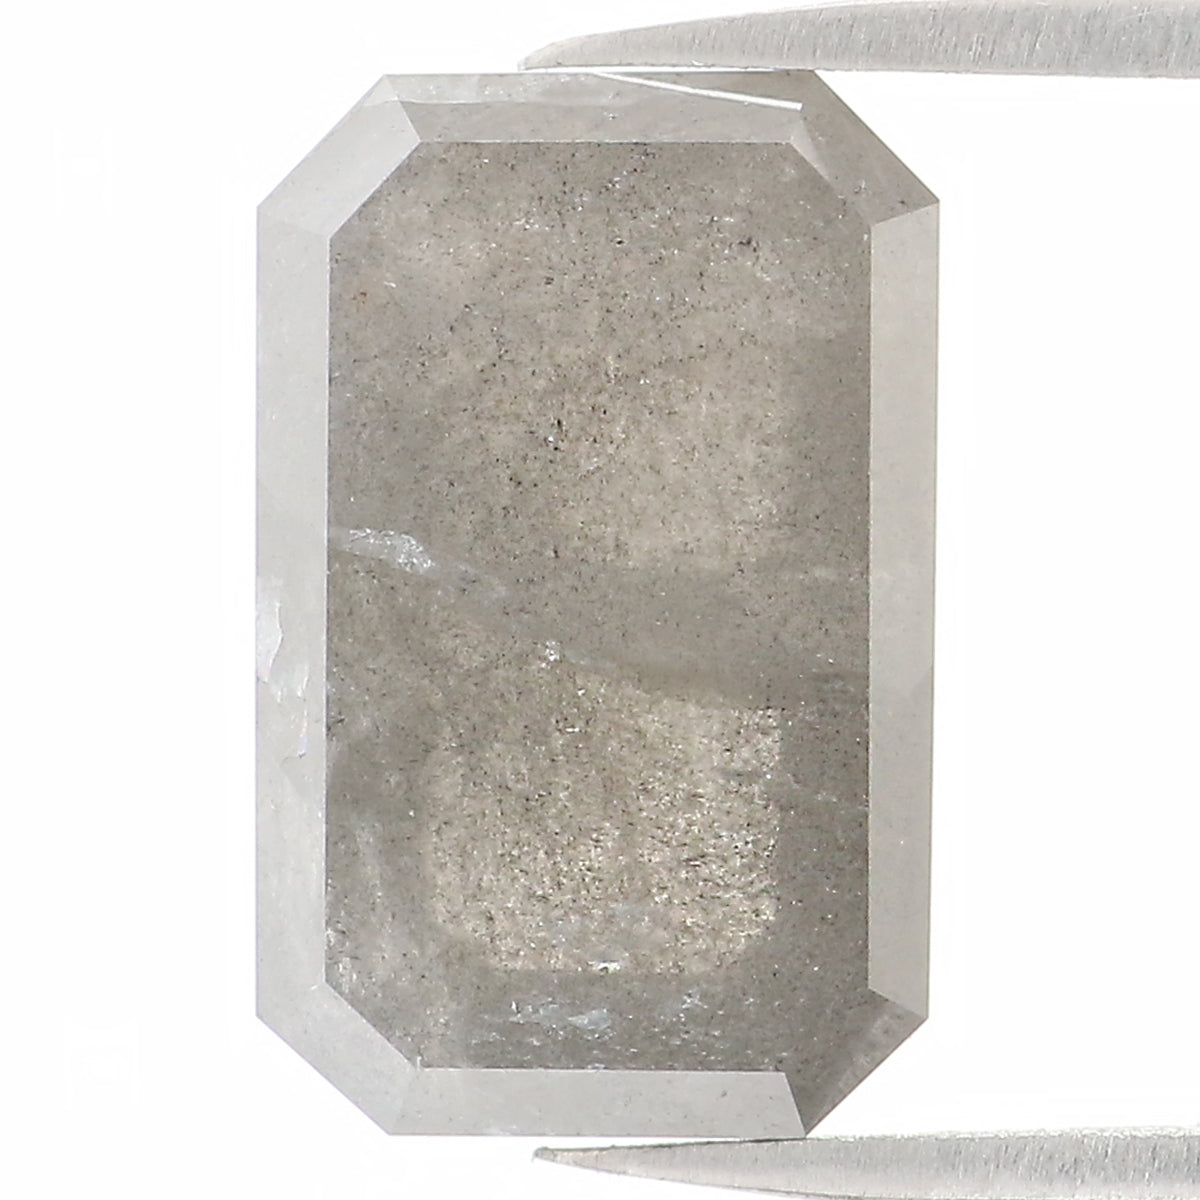 3.06 CT Natural Loose Emerald Shape Diamond Salt And Pepper Emerald Shape Diamond 10.50 MM Grey Color Emerald Rose Cut Diamond QL1155